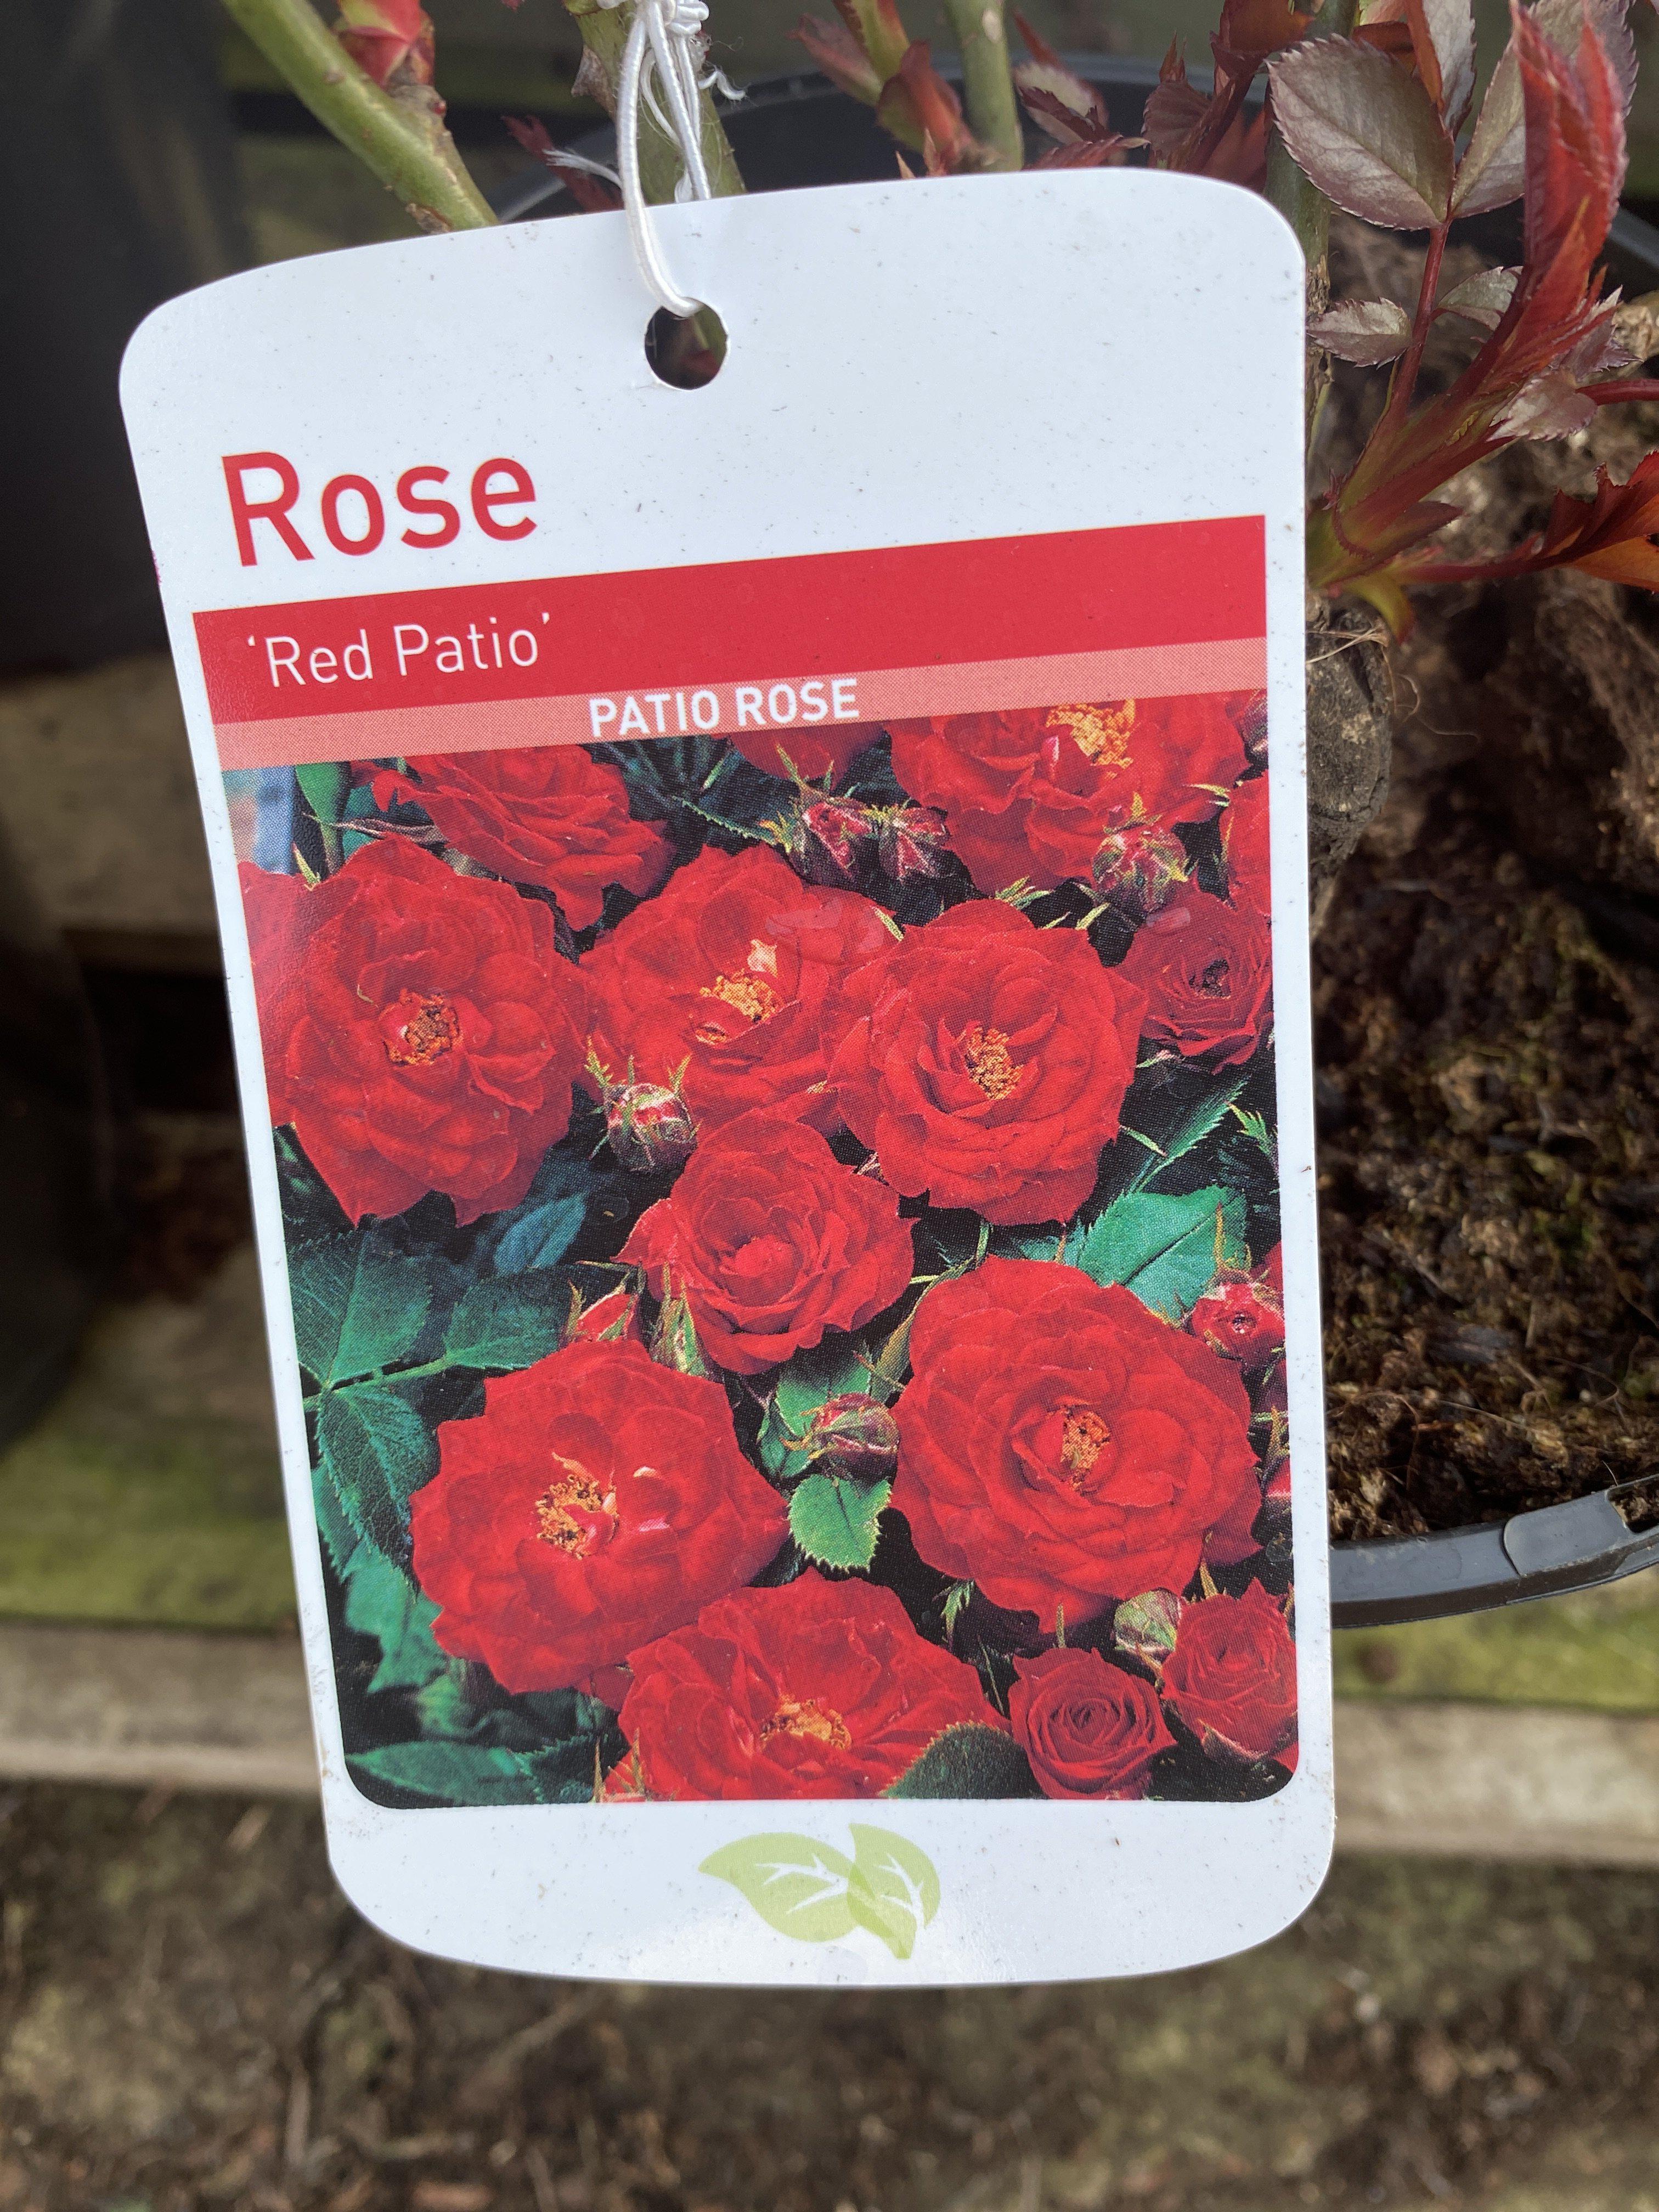 Rose “Red Patio”